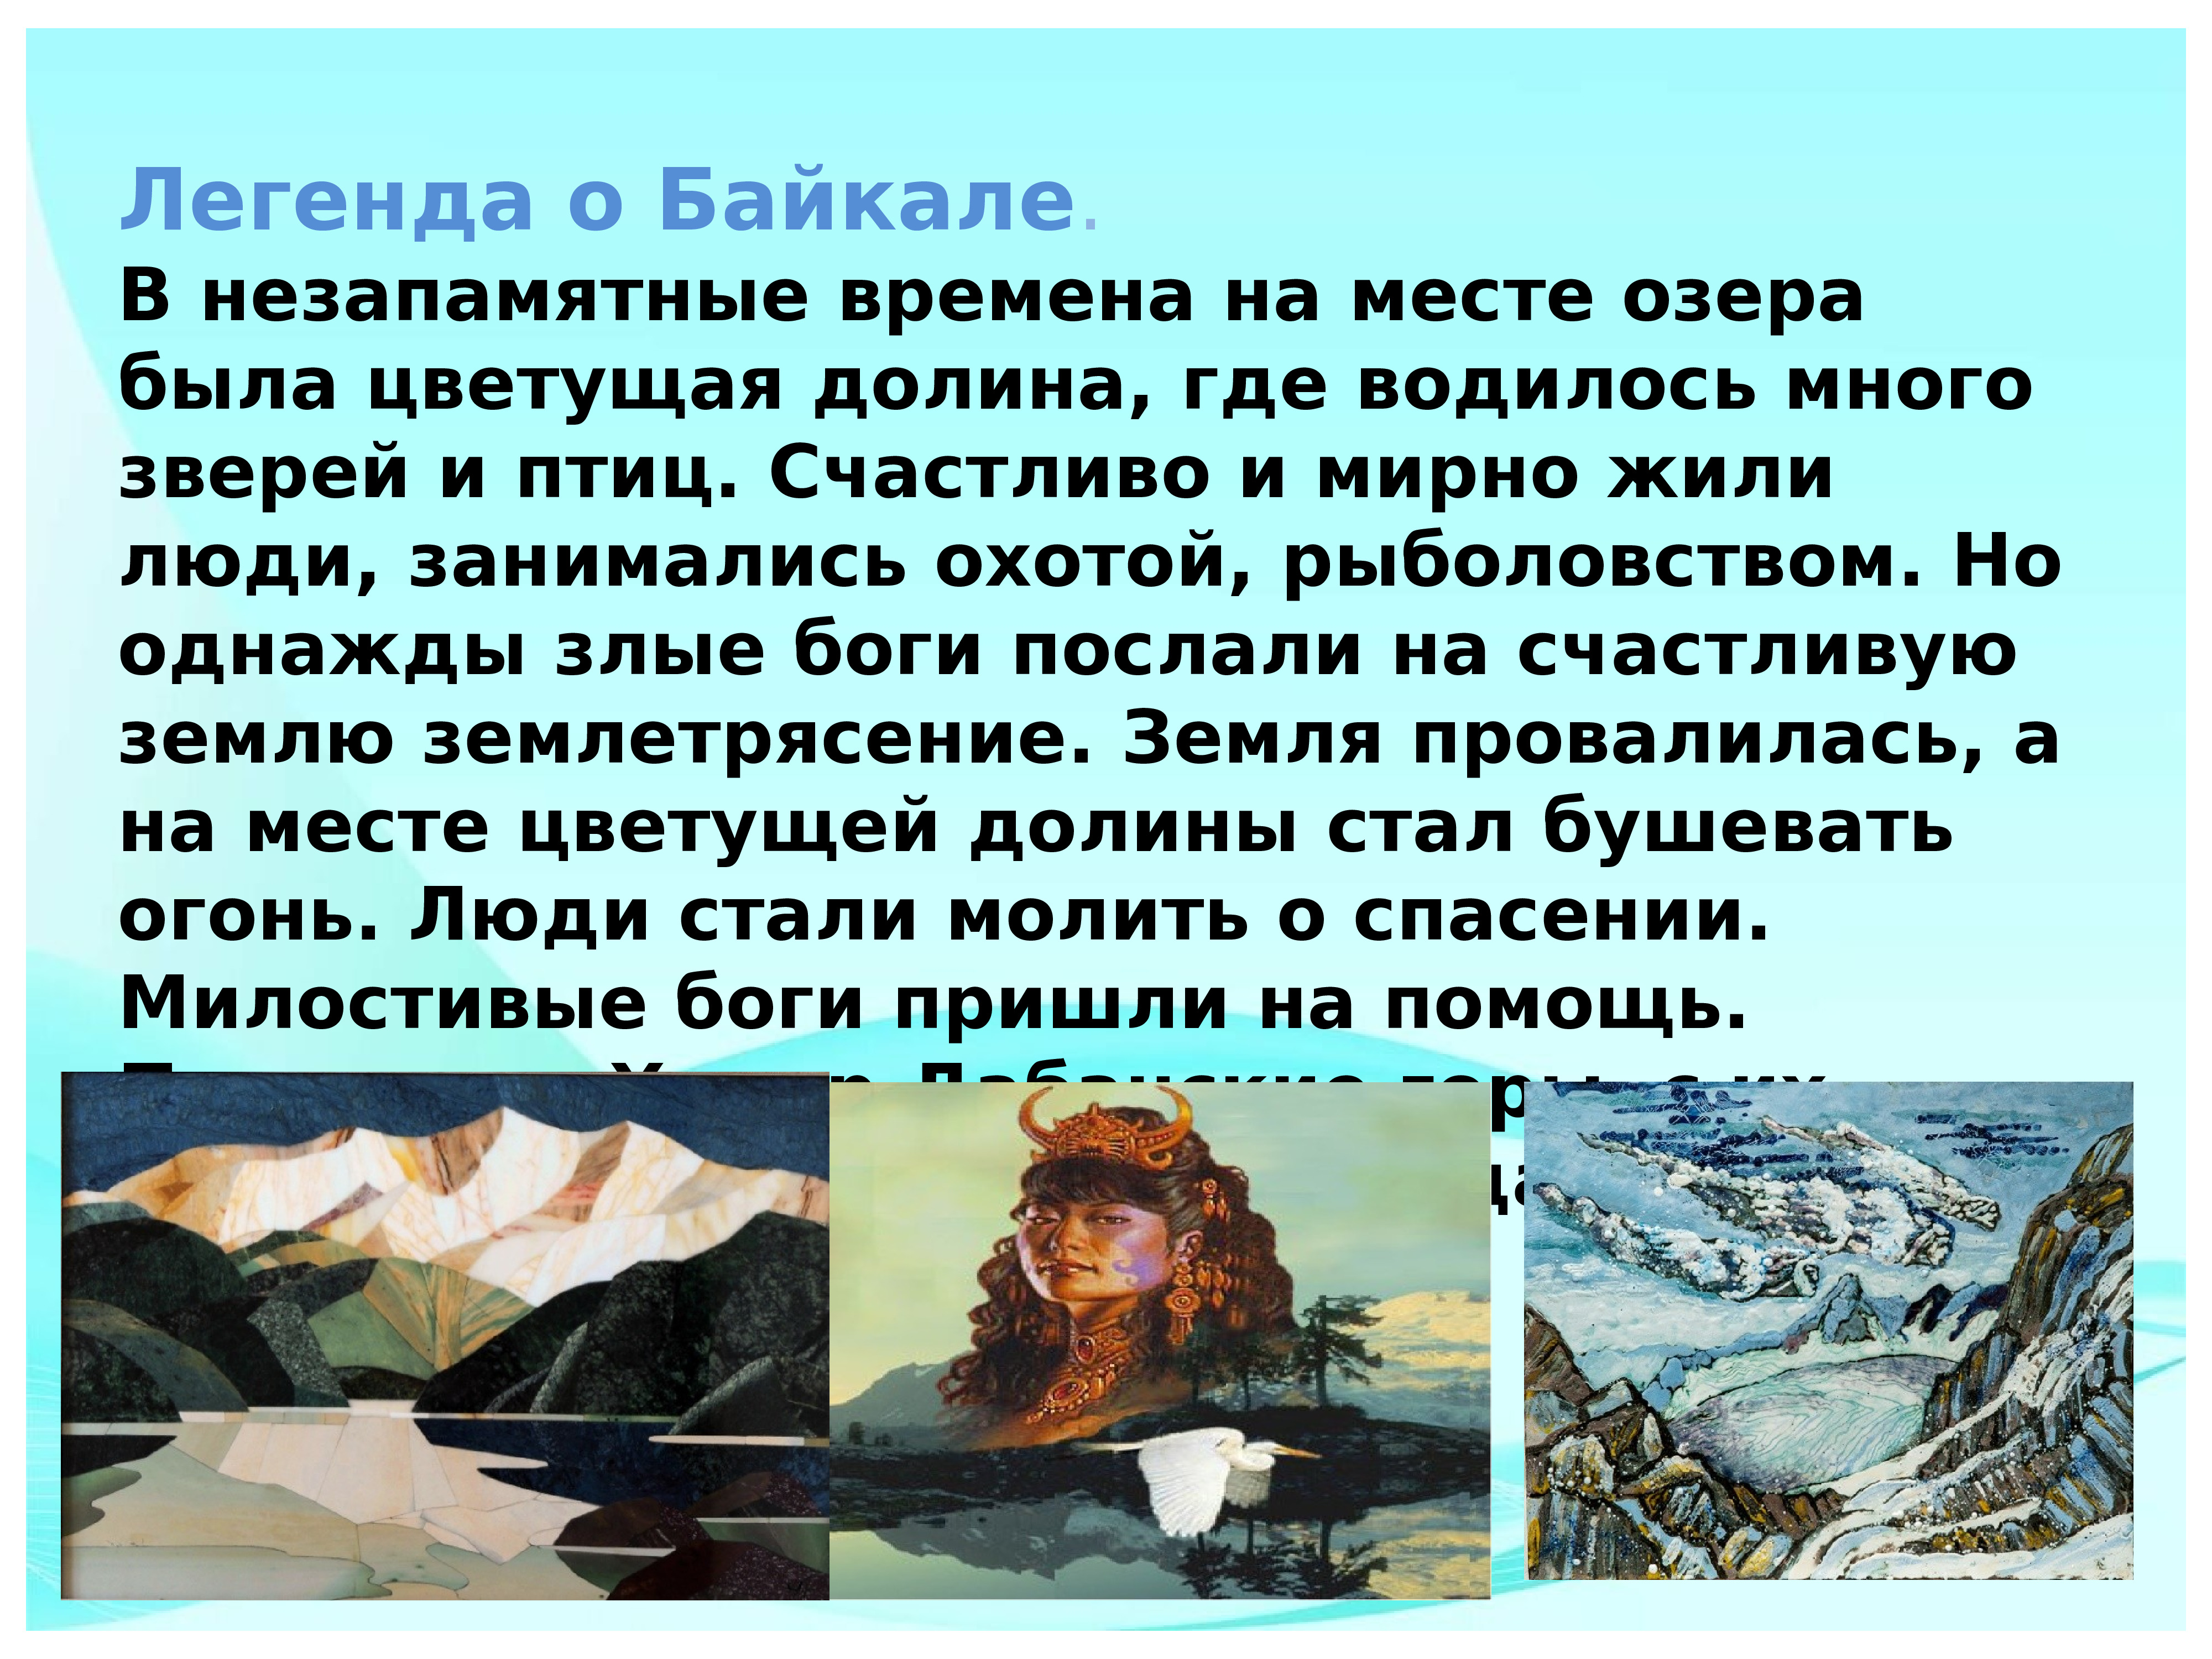 Проект про озера. Озеро Байкал презентация. Рассказ о Байкале. Озеро Байкал проект. Описание Байкала.